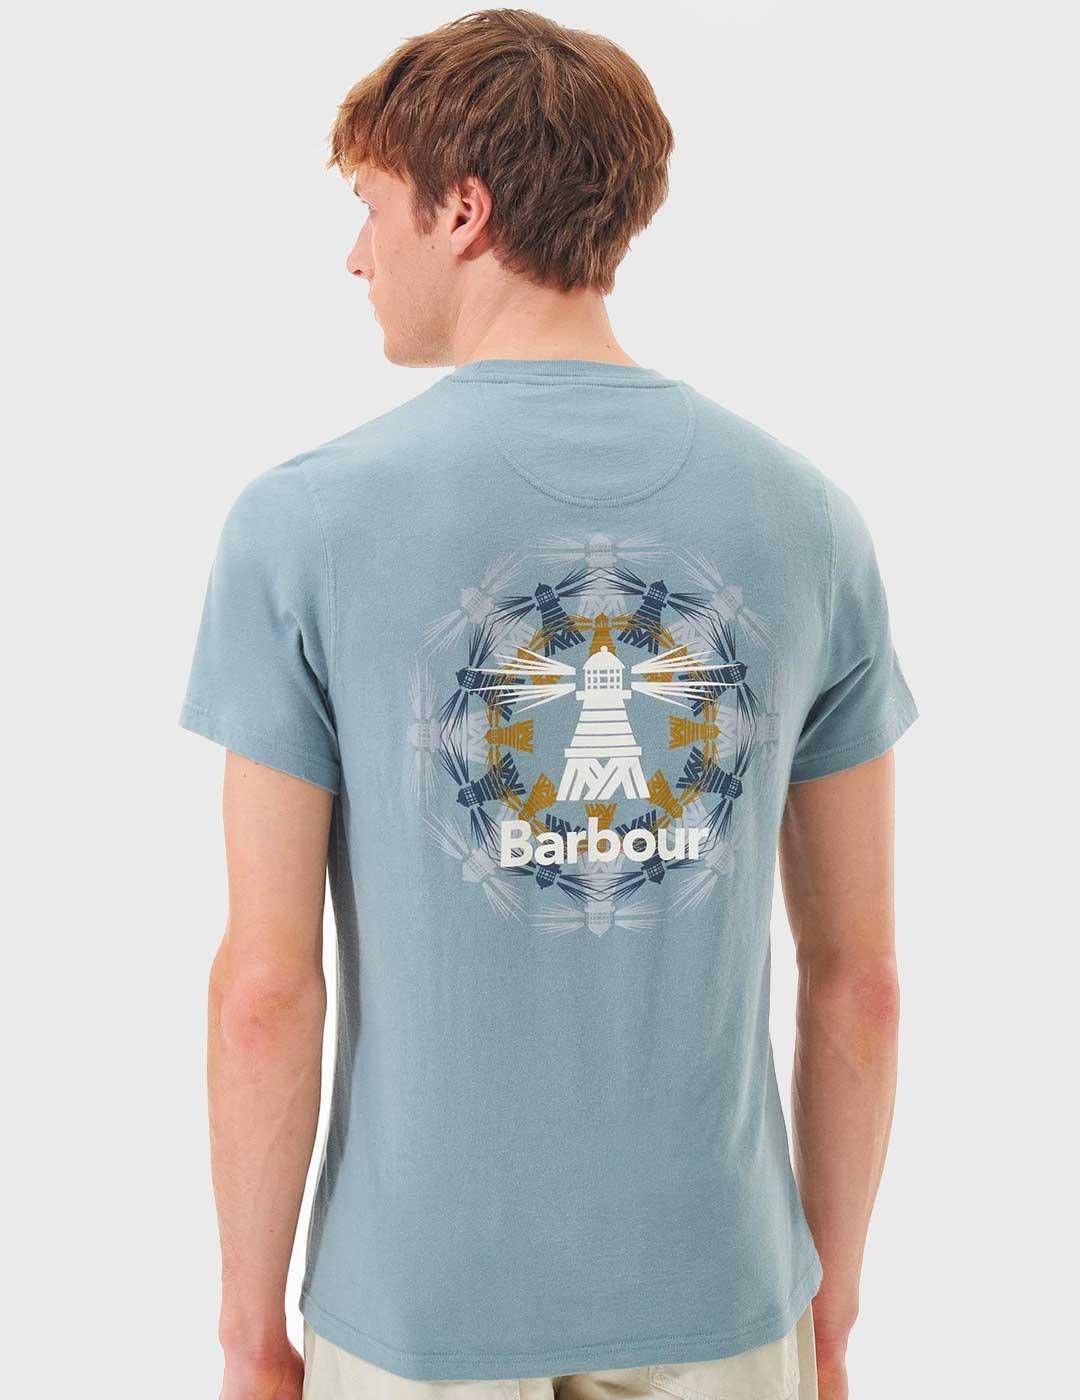 Camiseta Barbour Brathay azul para hombre